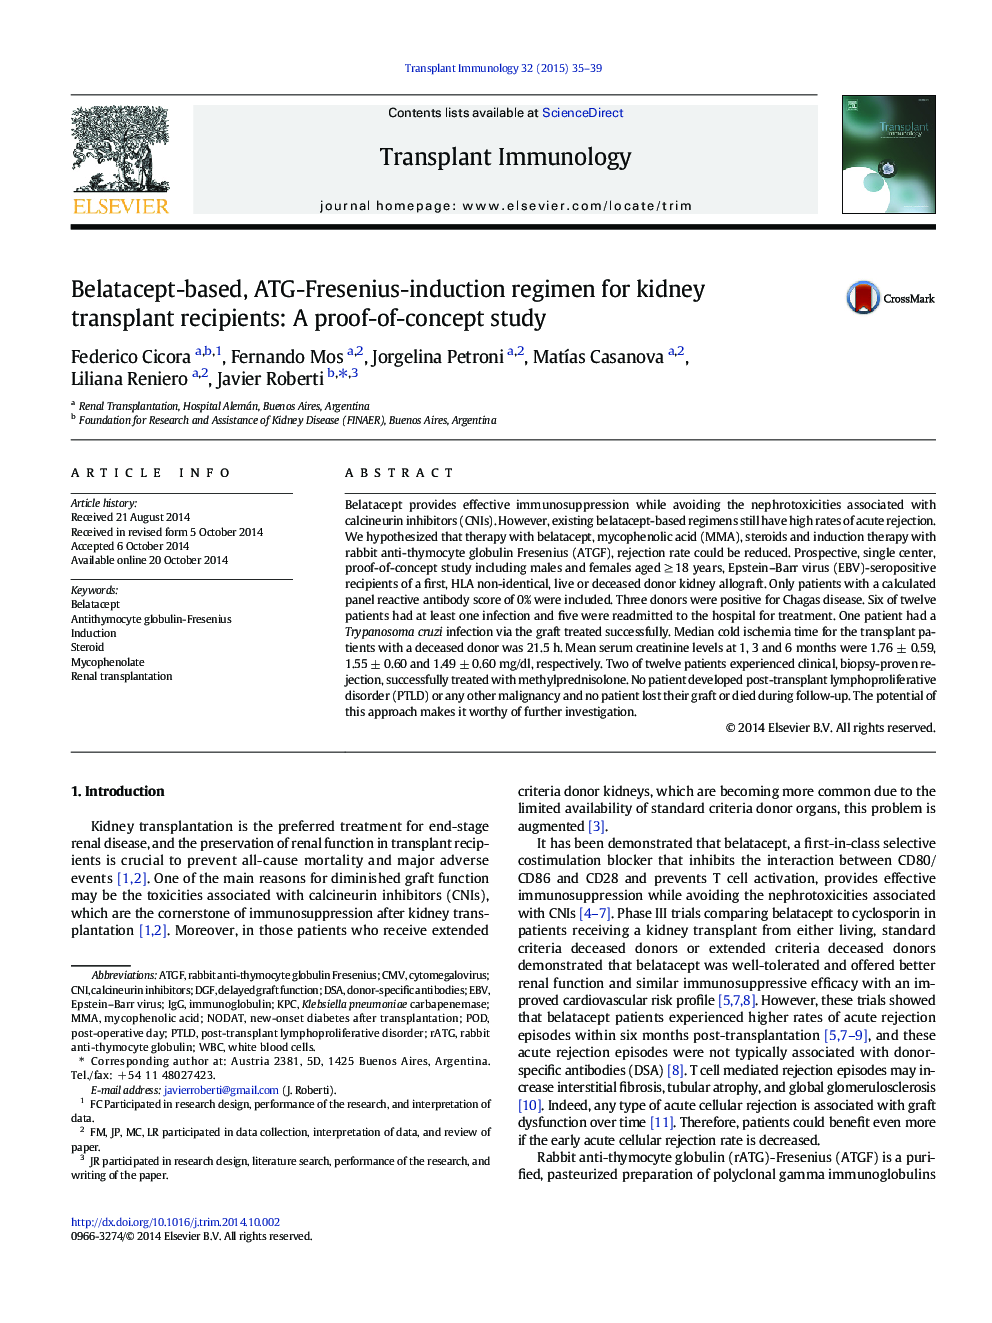 Belatacept-based, ATG-Fresenius-induction regimen for kidney transplant recipients: A proof-of-concept study